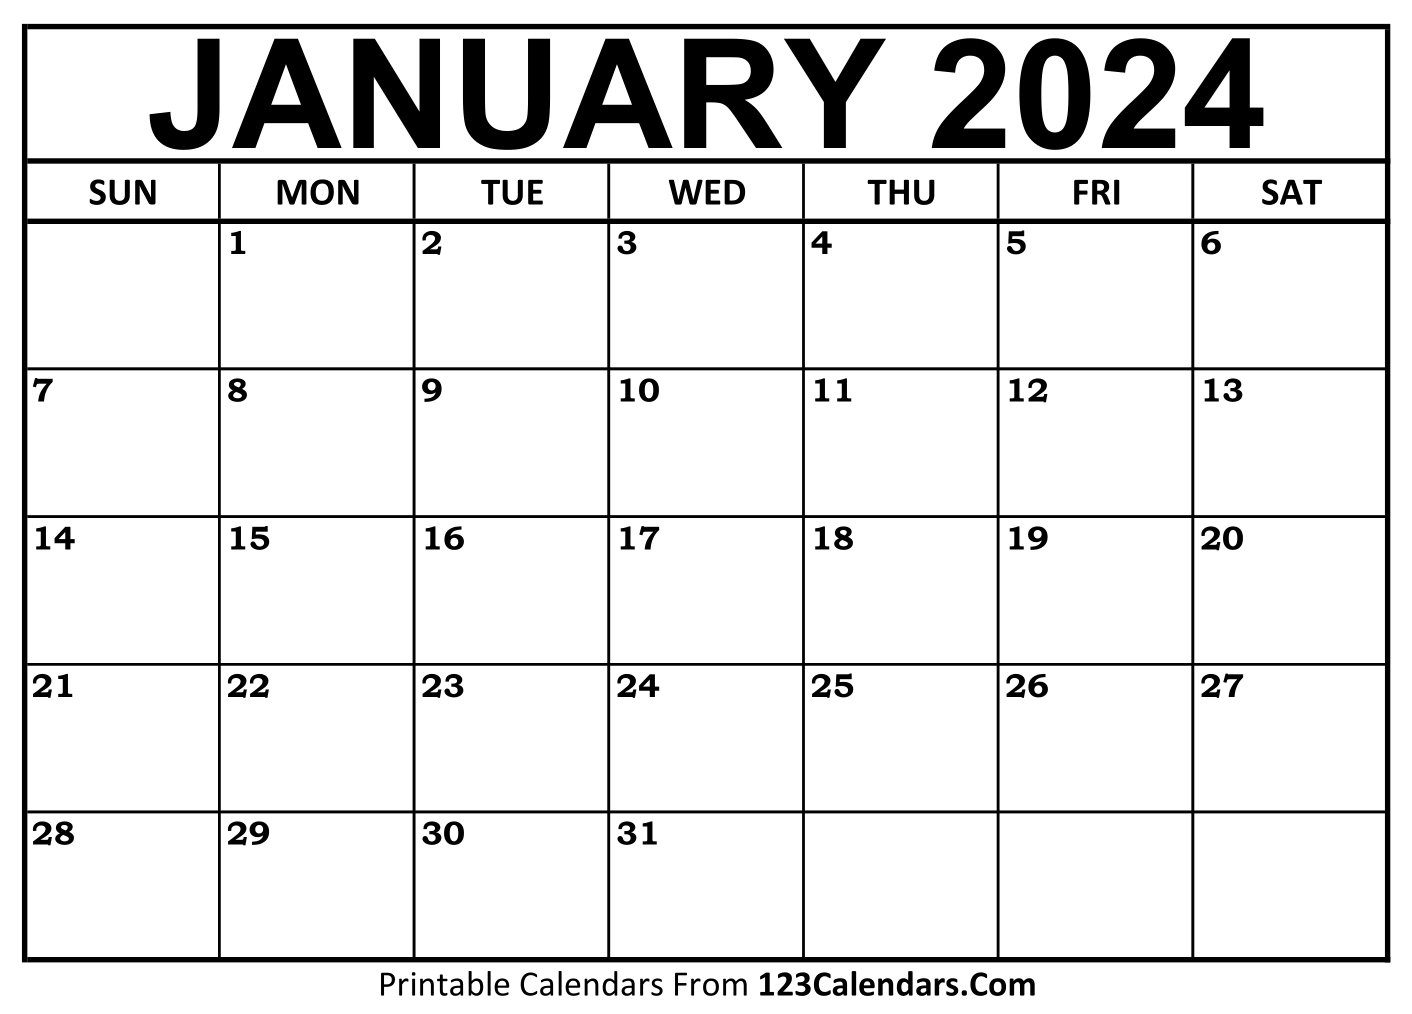 Printable January 2024 Calendar Templates - 123Calendars | 2024 Printable Calendar By Month